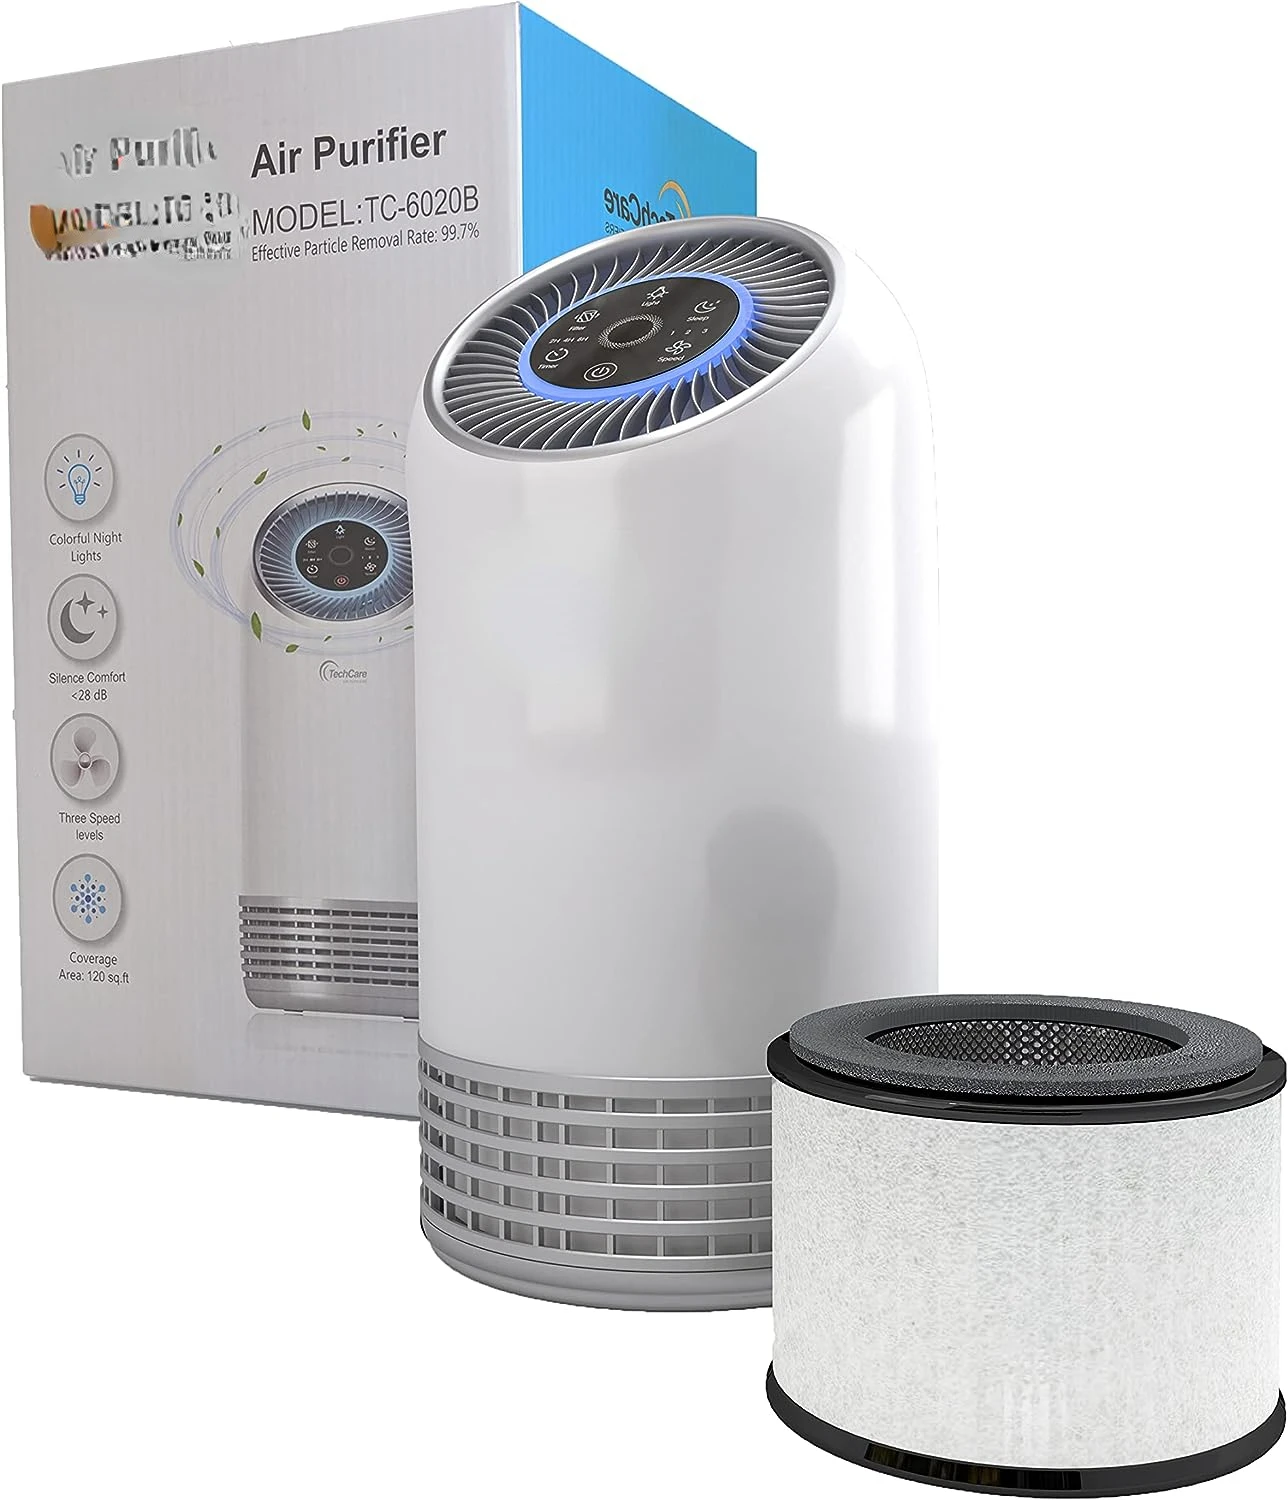 

Purifier Bedroom Office Use [True Hepa] Filter Silent Comfort White Noise Smart Air Cleaner Smokers Eliminate Allergies Odor Dus